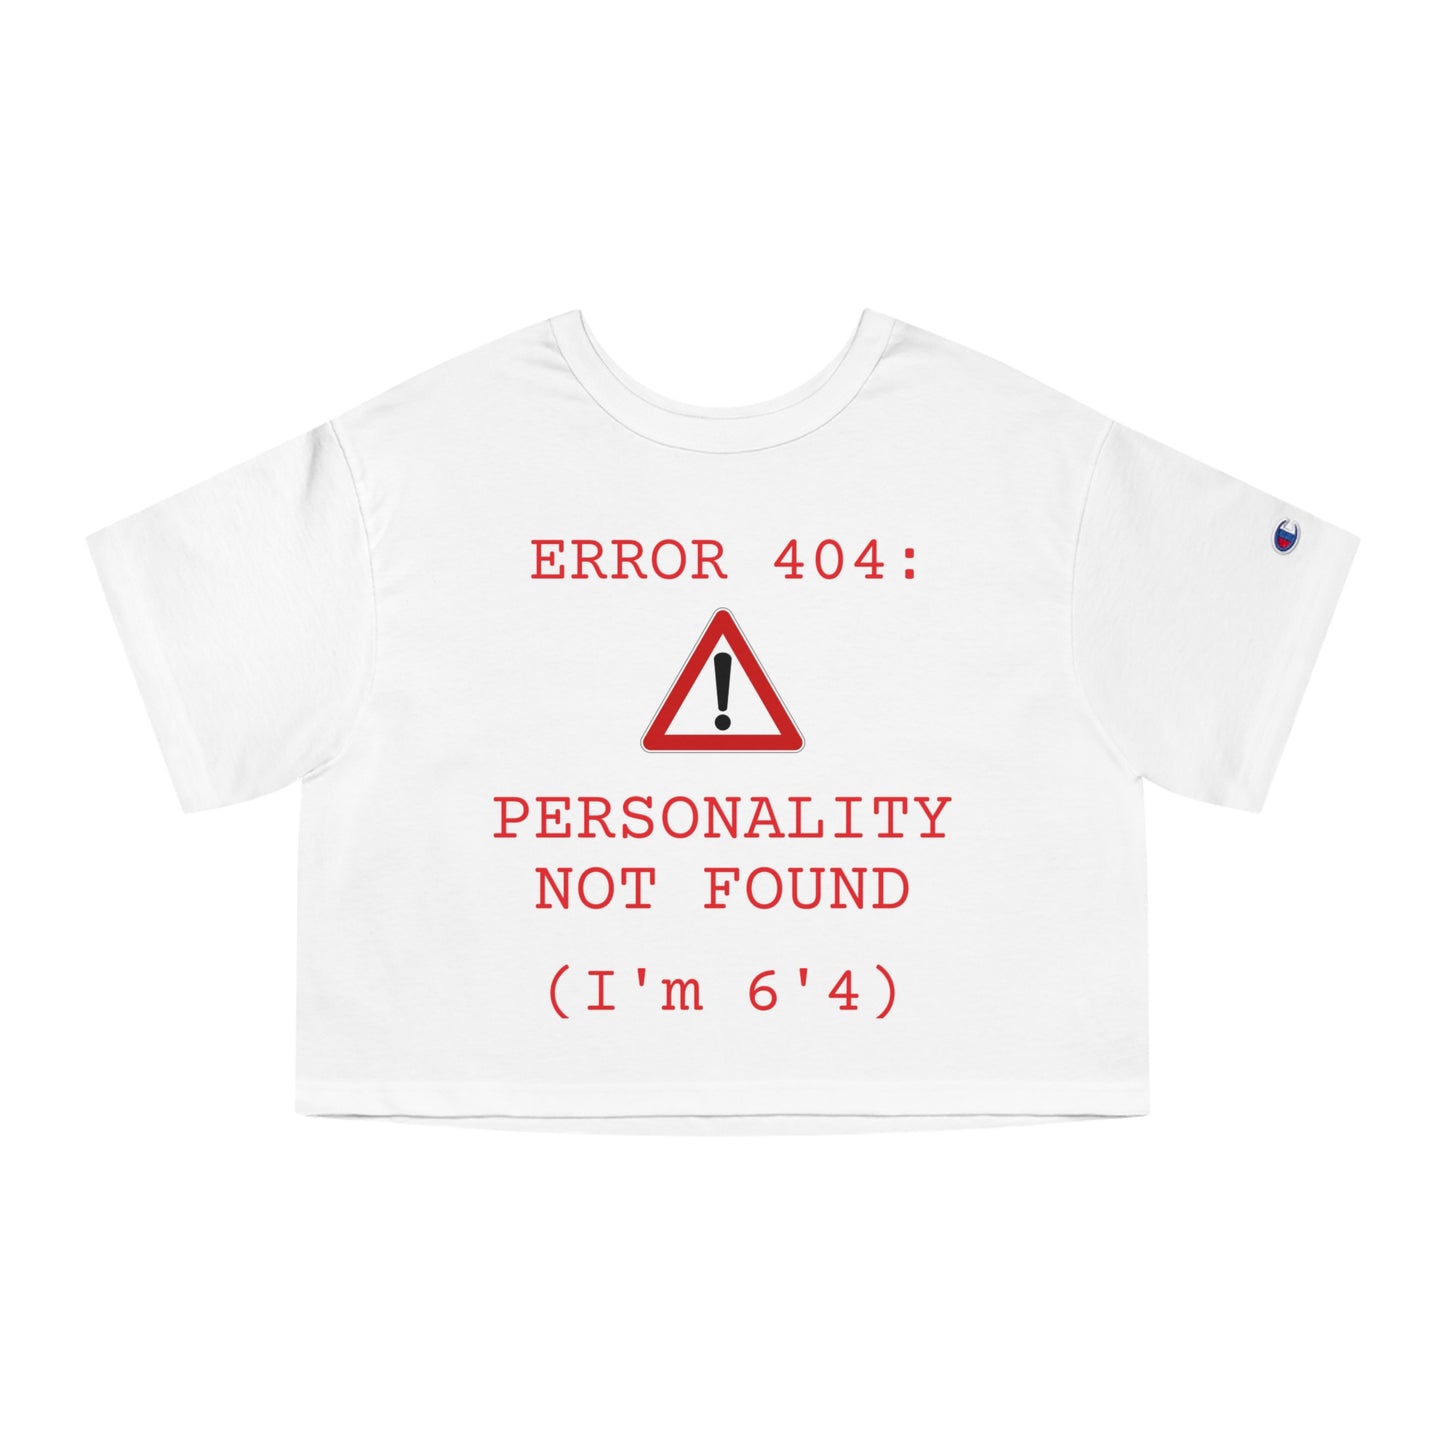 "ERROR 404: PERSONALITY NOT FOUND" - Champion™ crop top